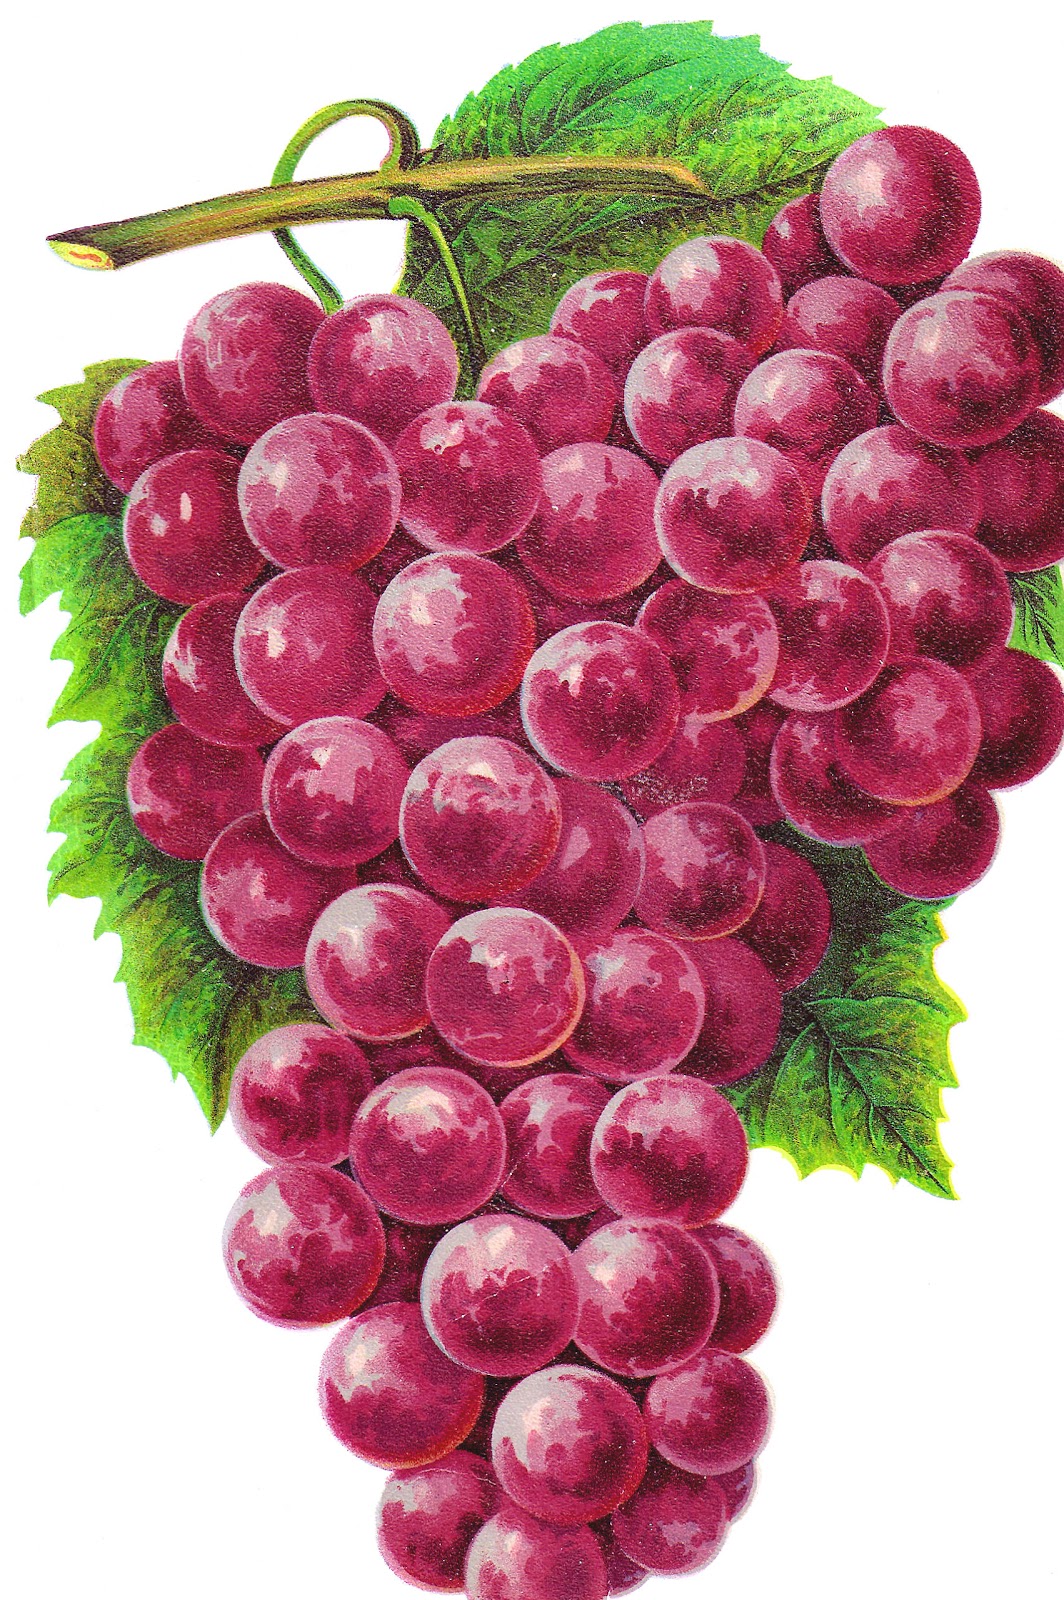 Antique Images  Free Clip Art Of Fruit   Vintage Graphic Of Purple    